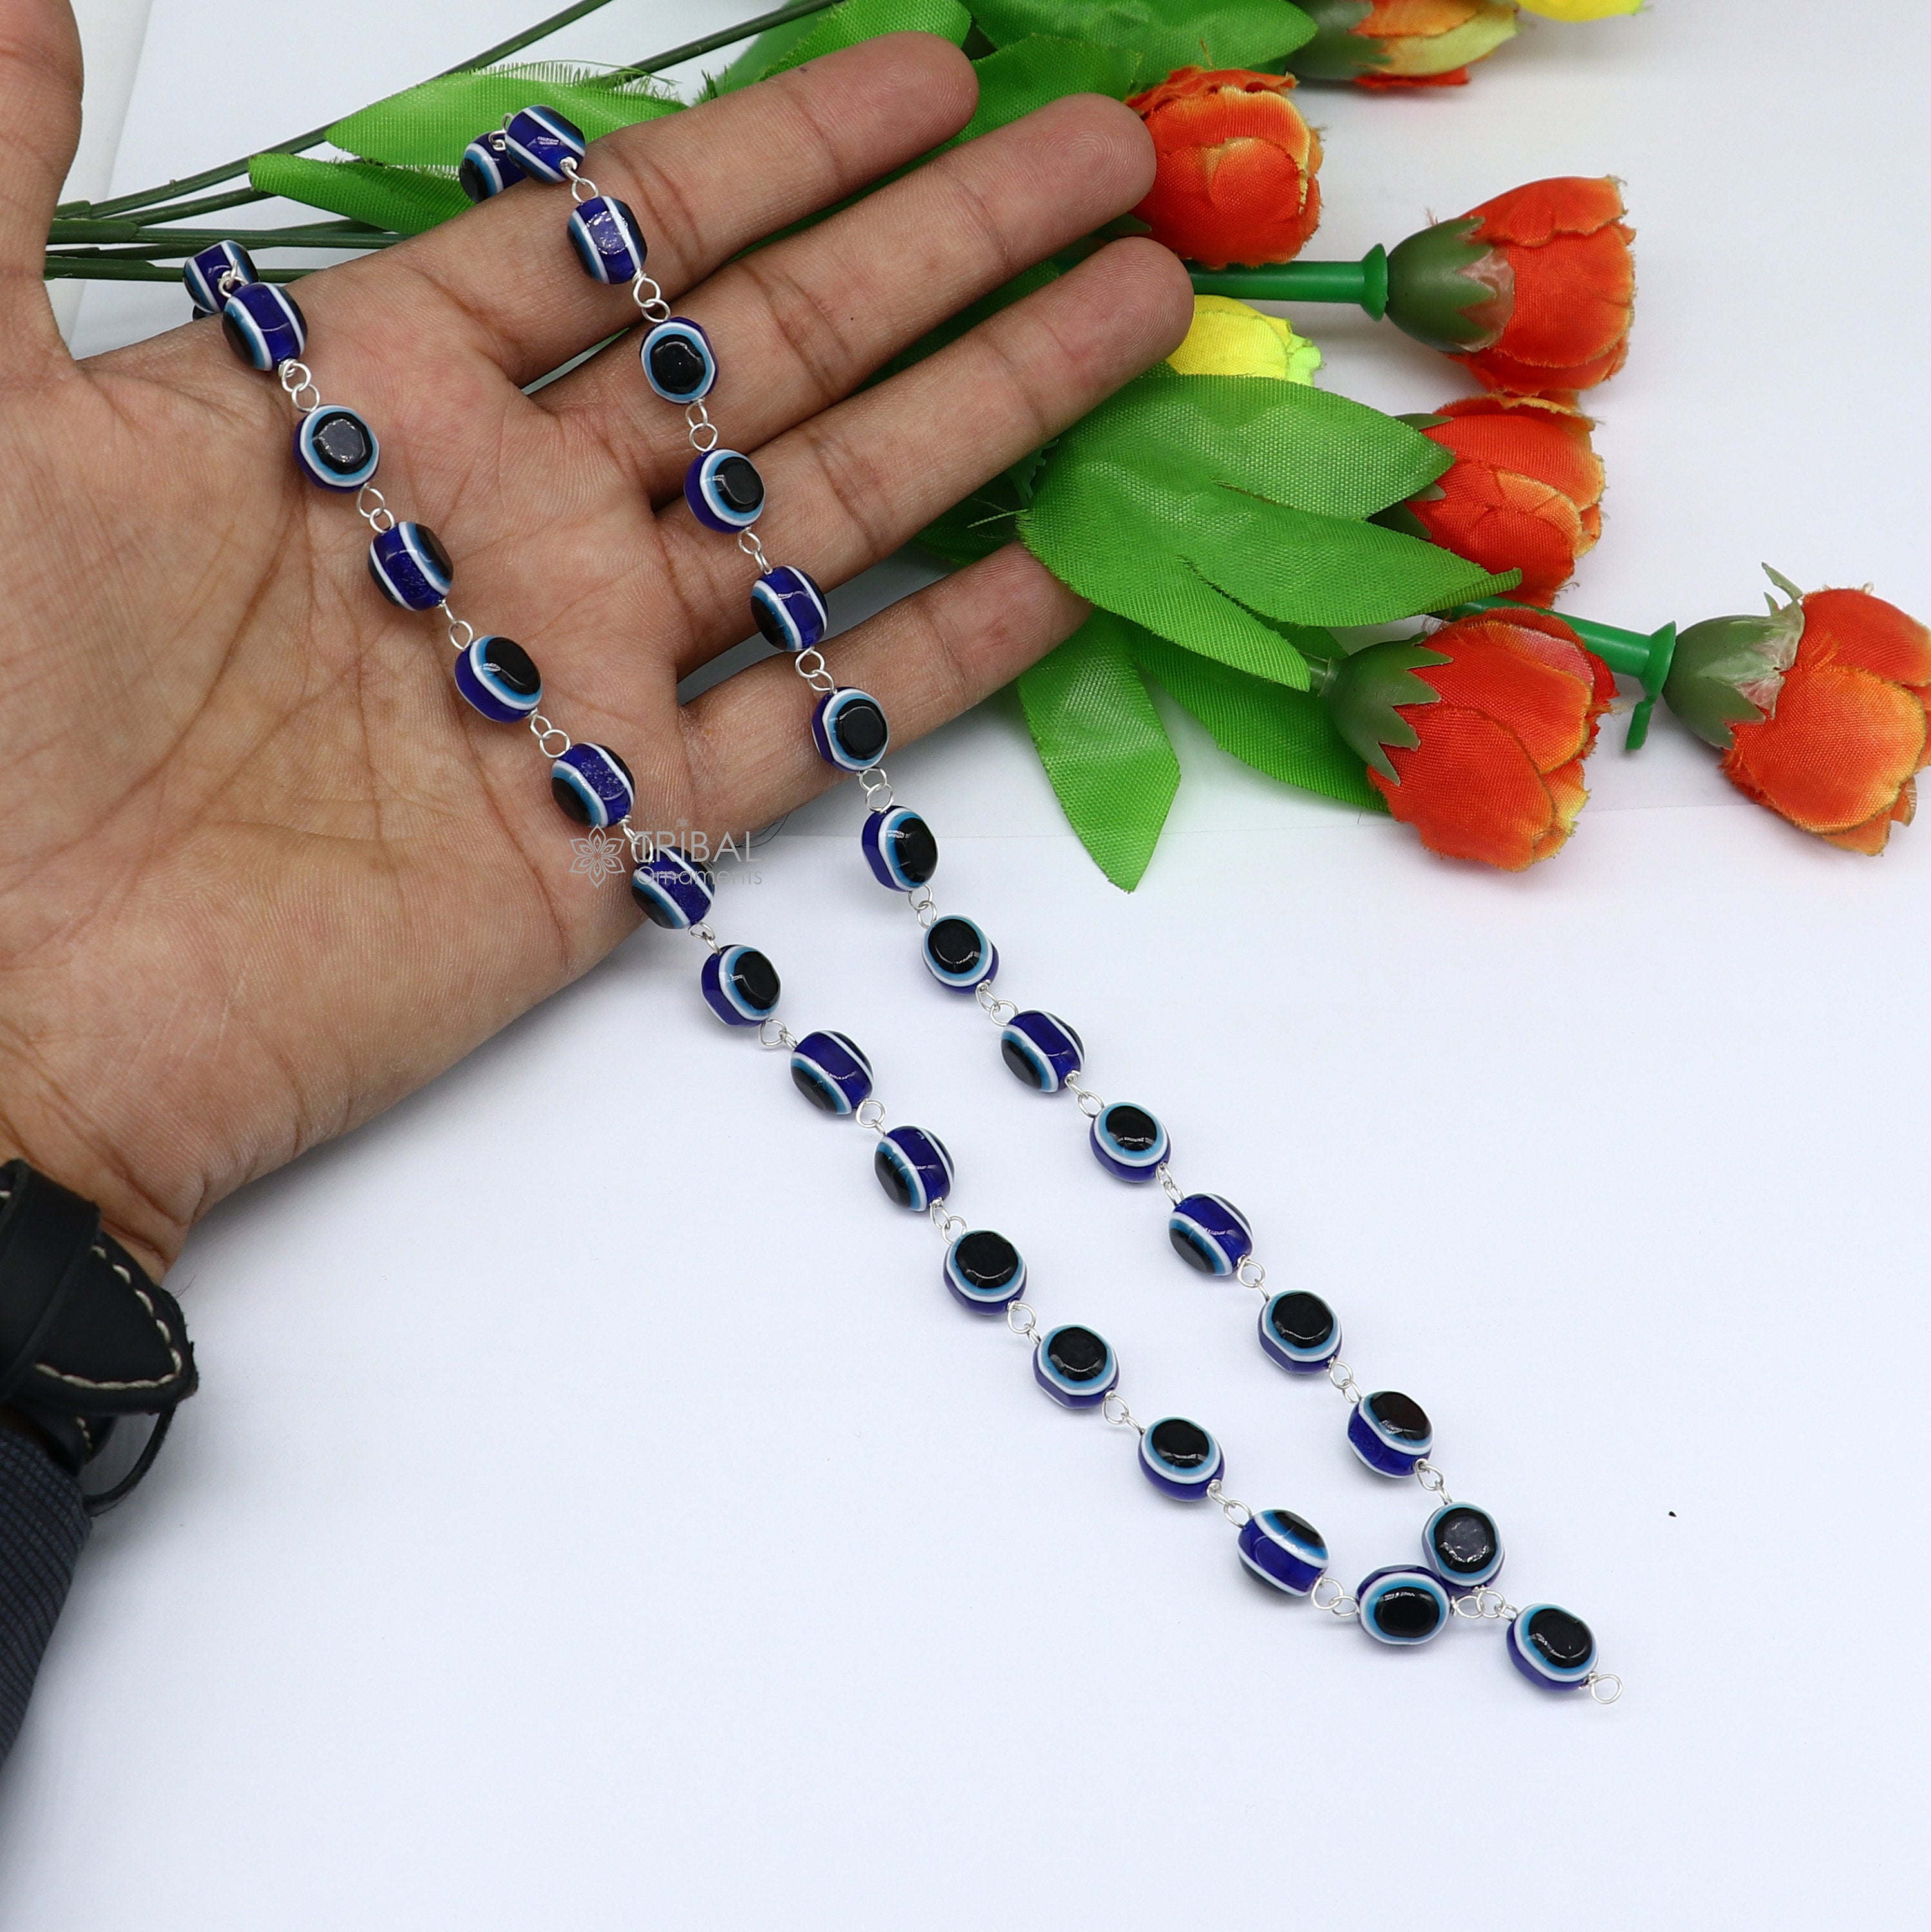 Handmade Sky Blue Evil Eye Beaded Necklace of 100% Natural Glass